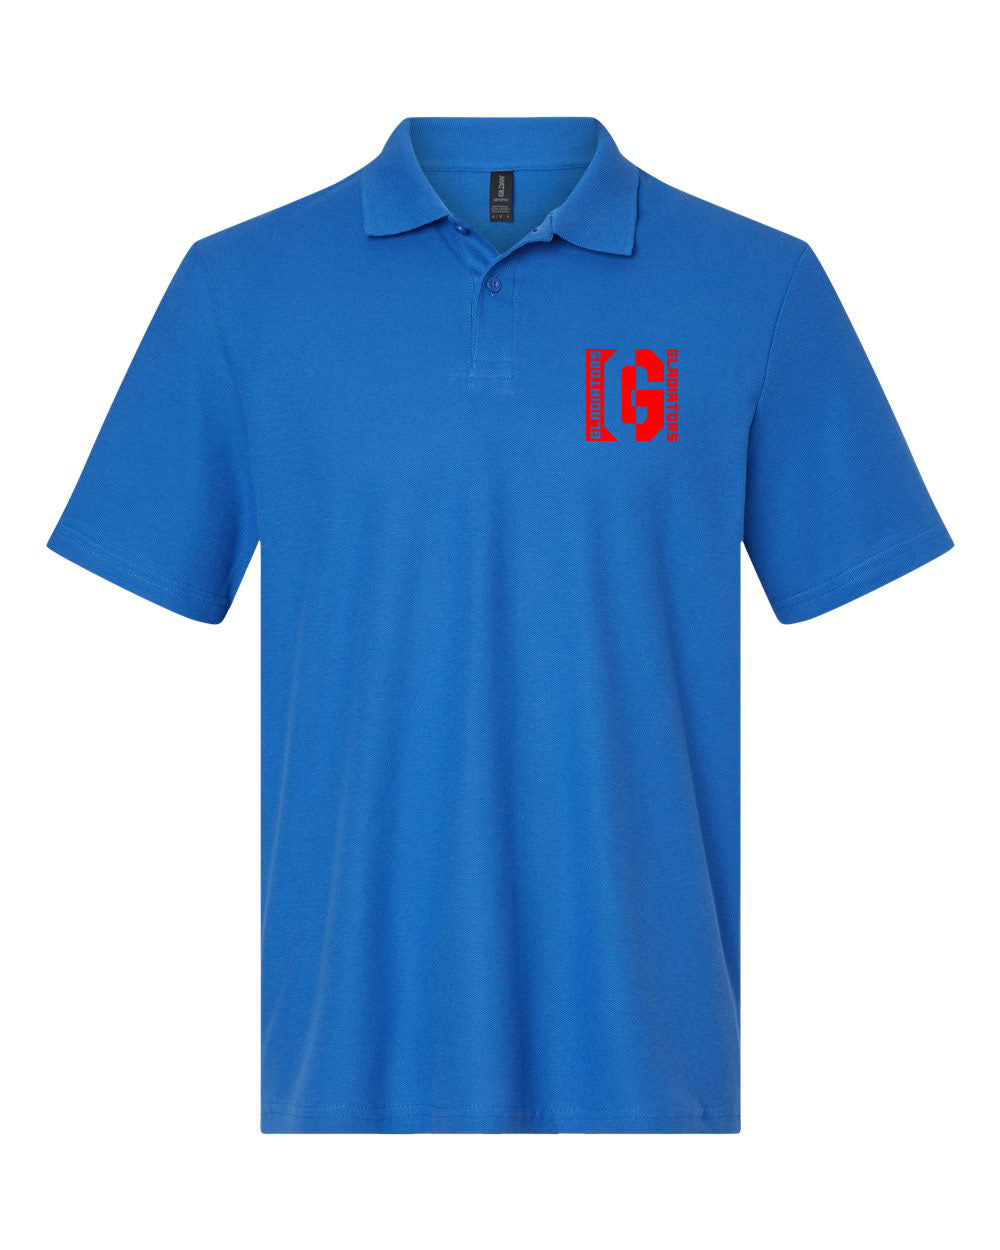 Goshen School Design 5 Polo T-Shirt